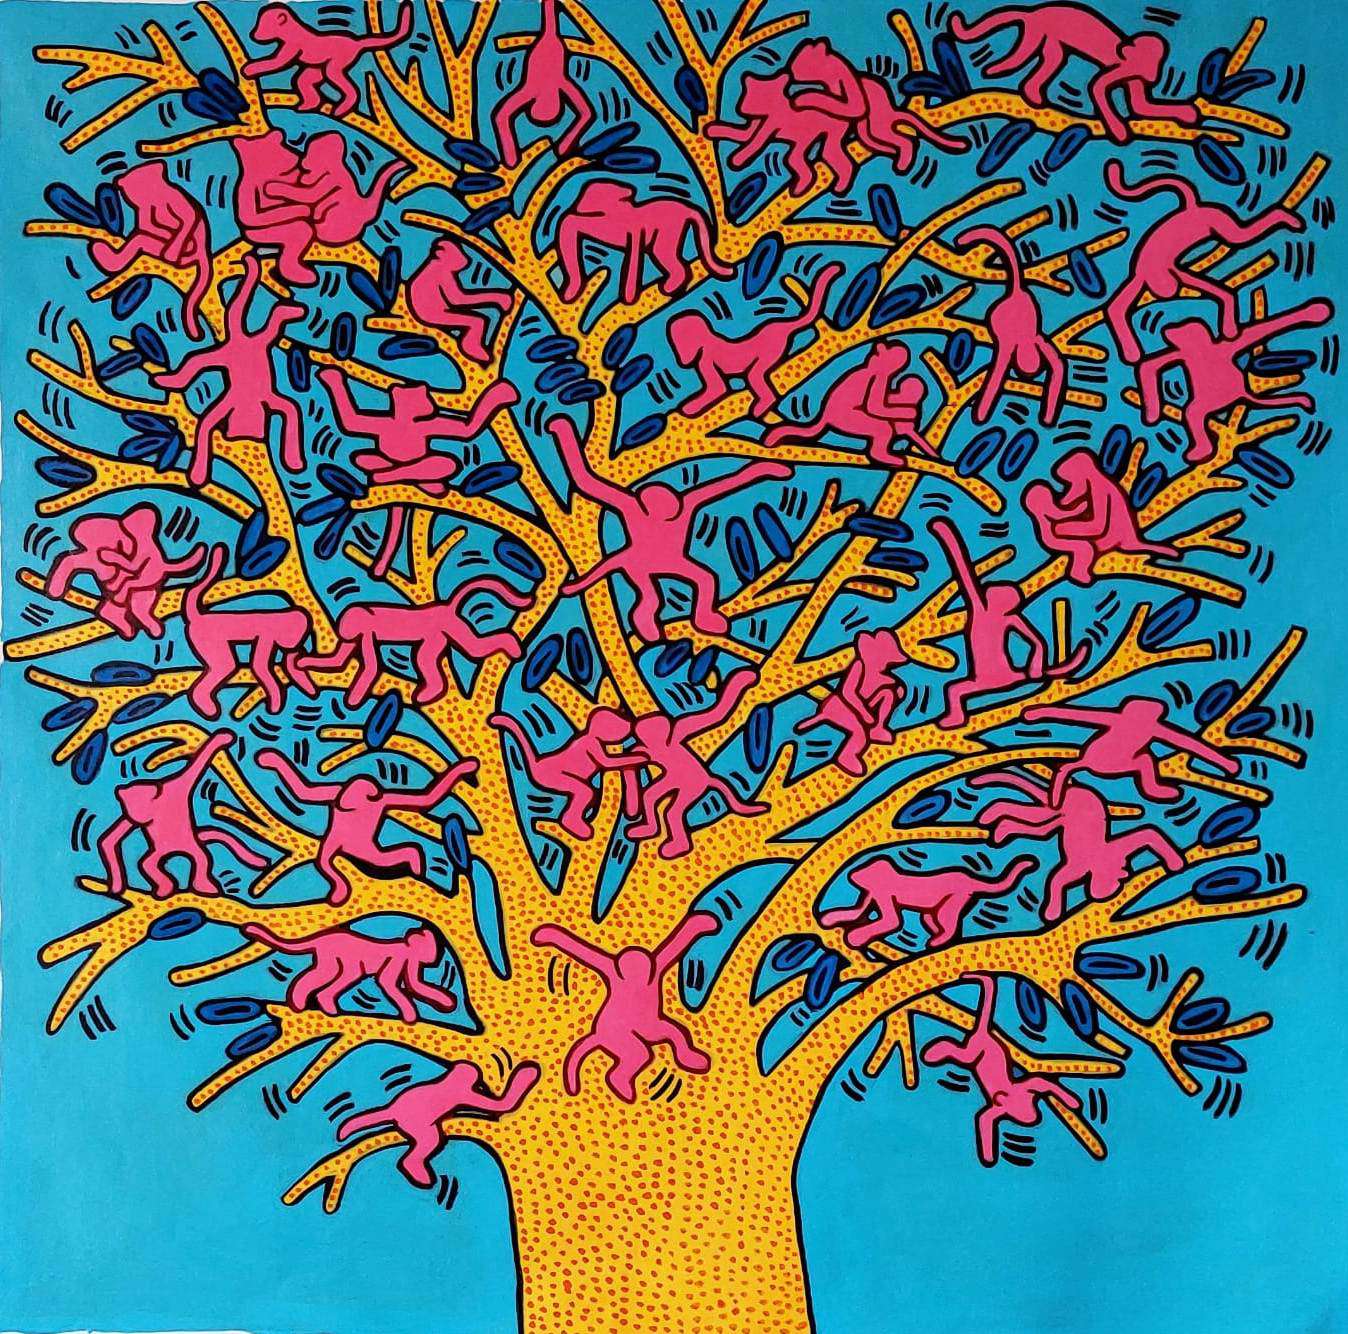 Tree of life, copy of original painting, Painting monkeys on tree, oil painting on canvas